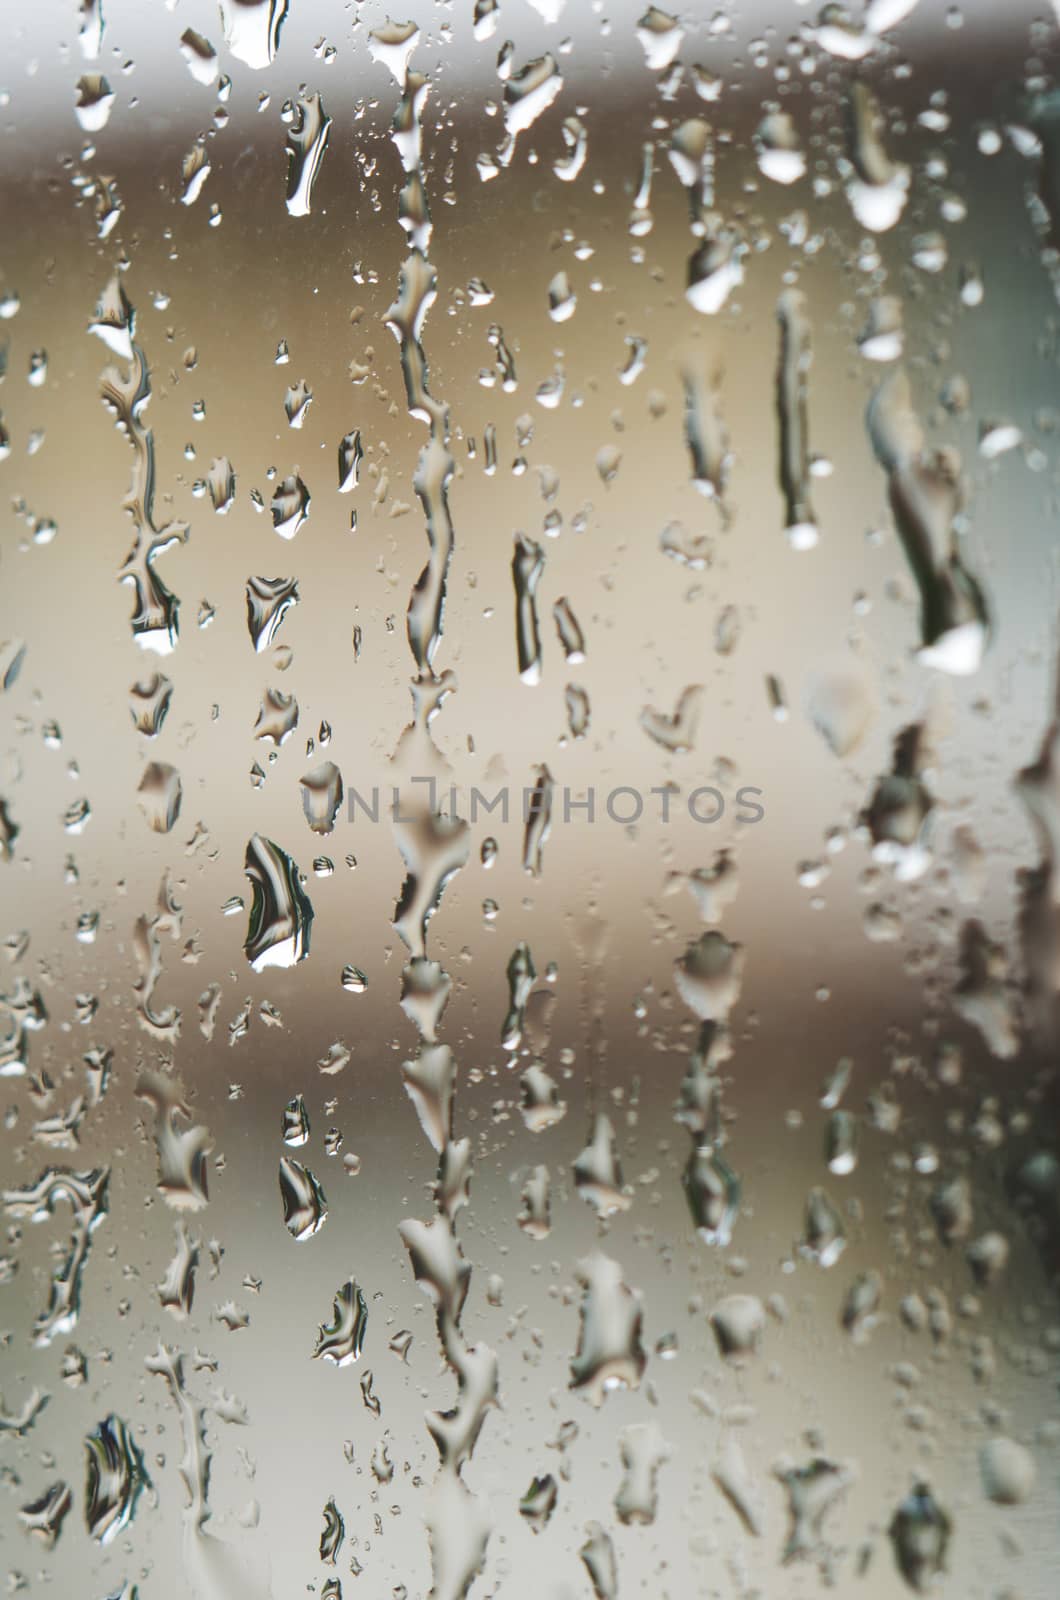 Rain water drops on windows - selective focus by daoleduc